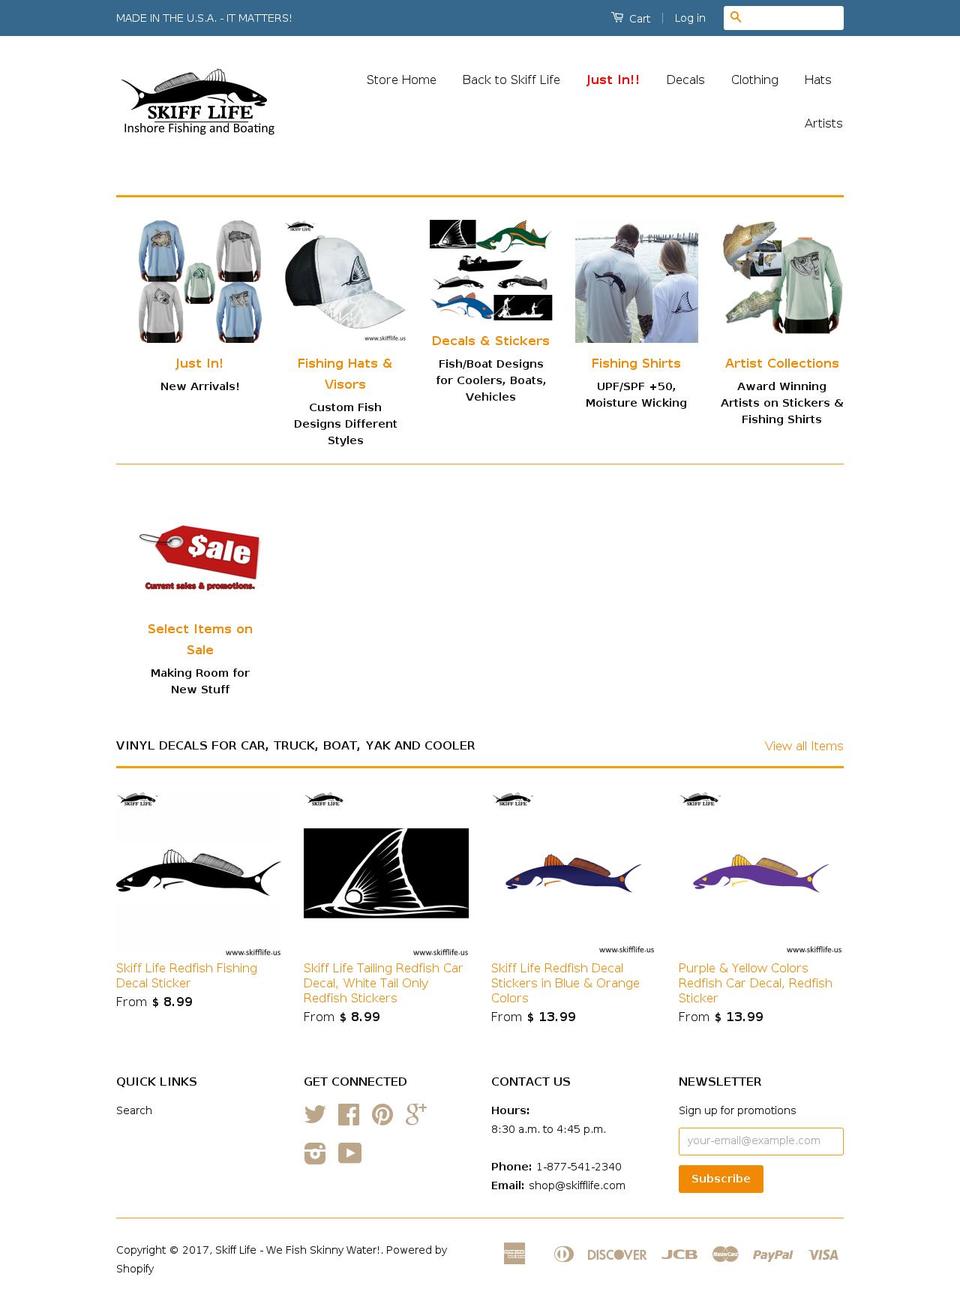 skifflife.us shopify website screenshot